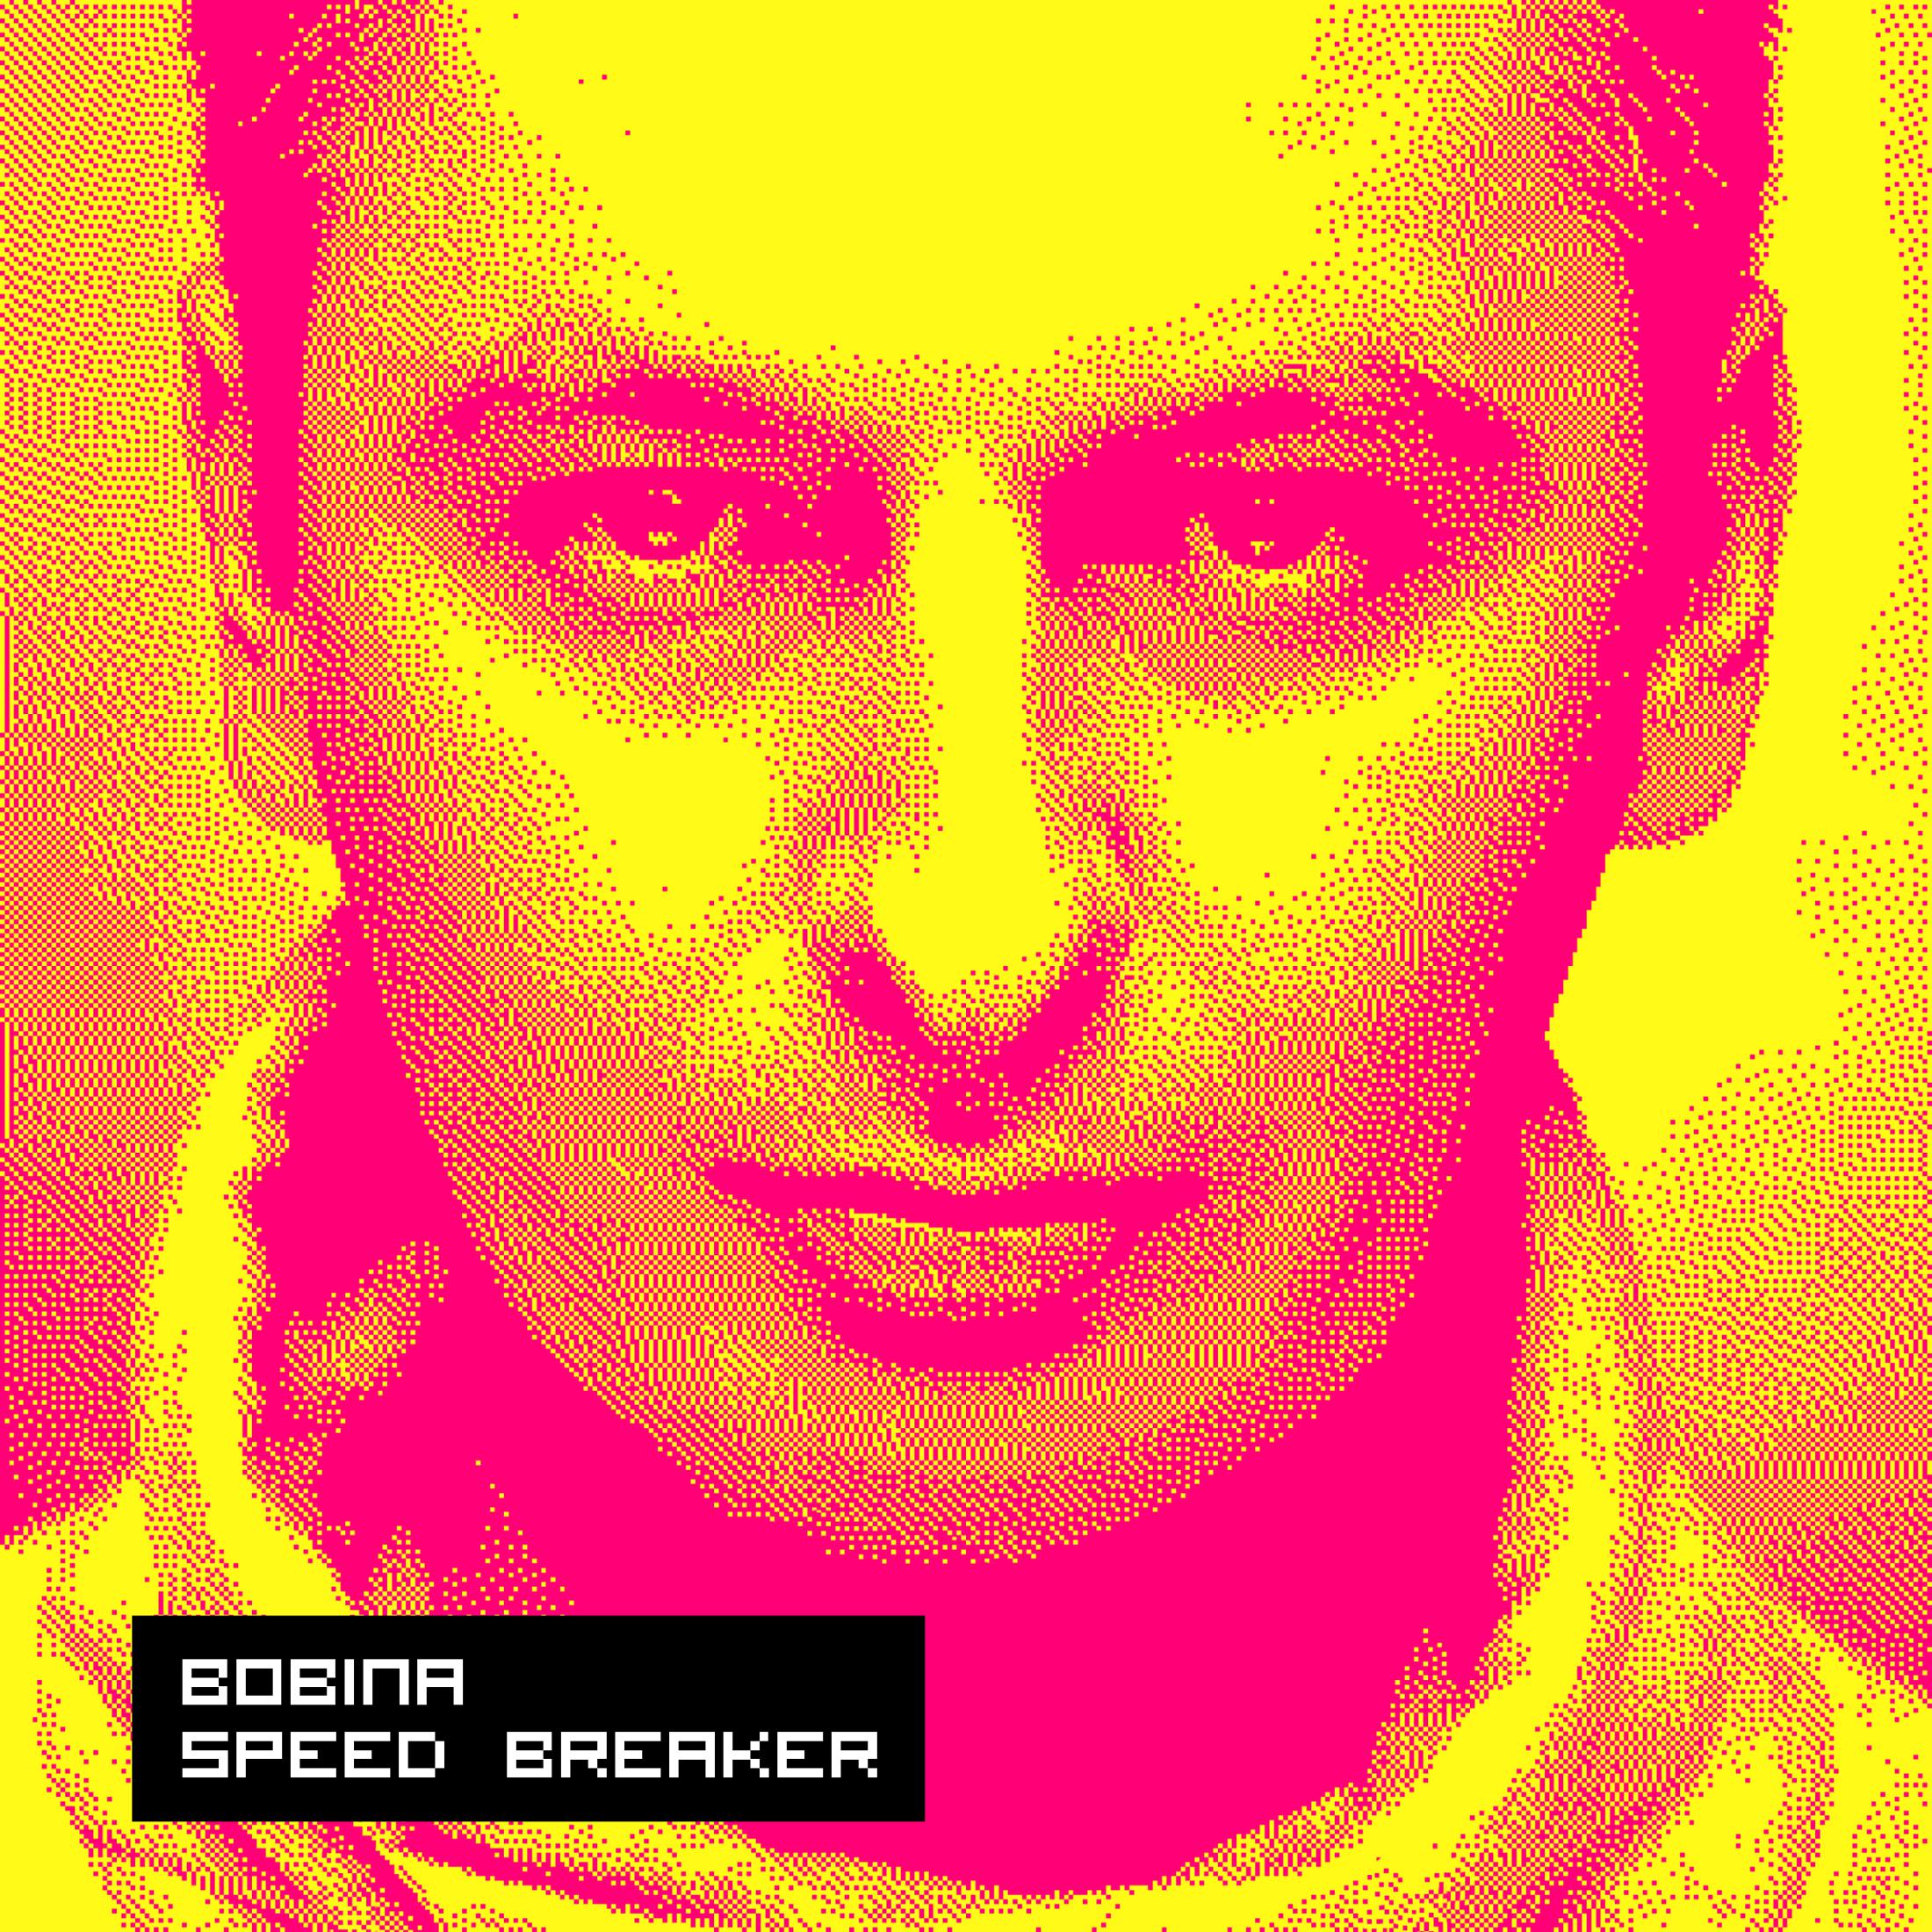 Bobina Speed Breaker cover artwork